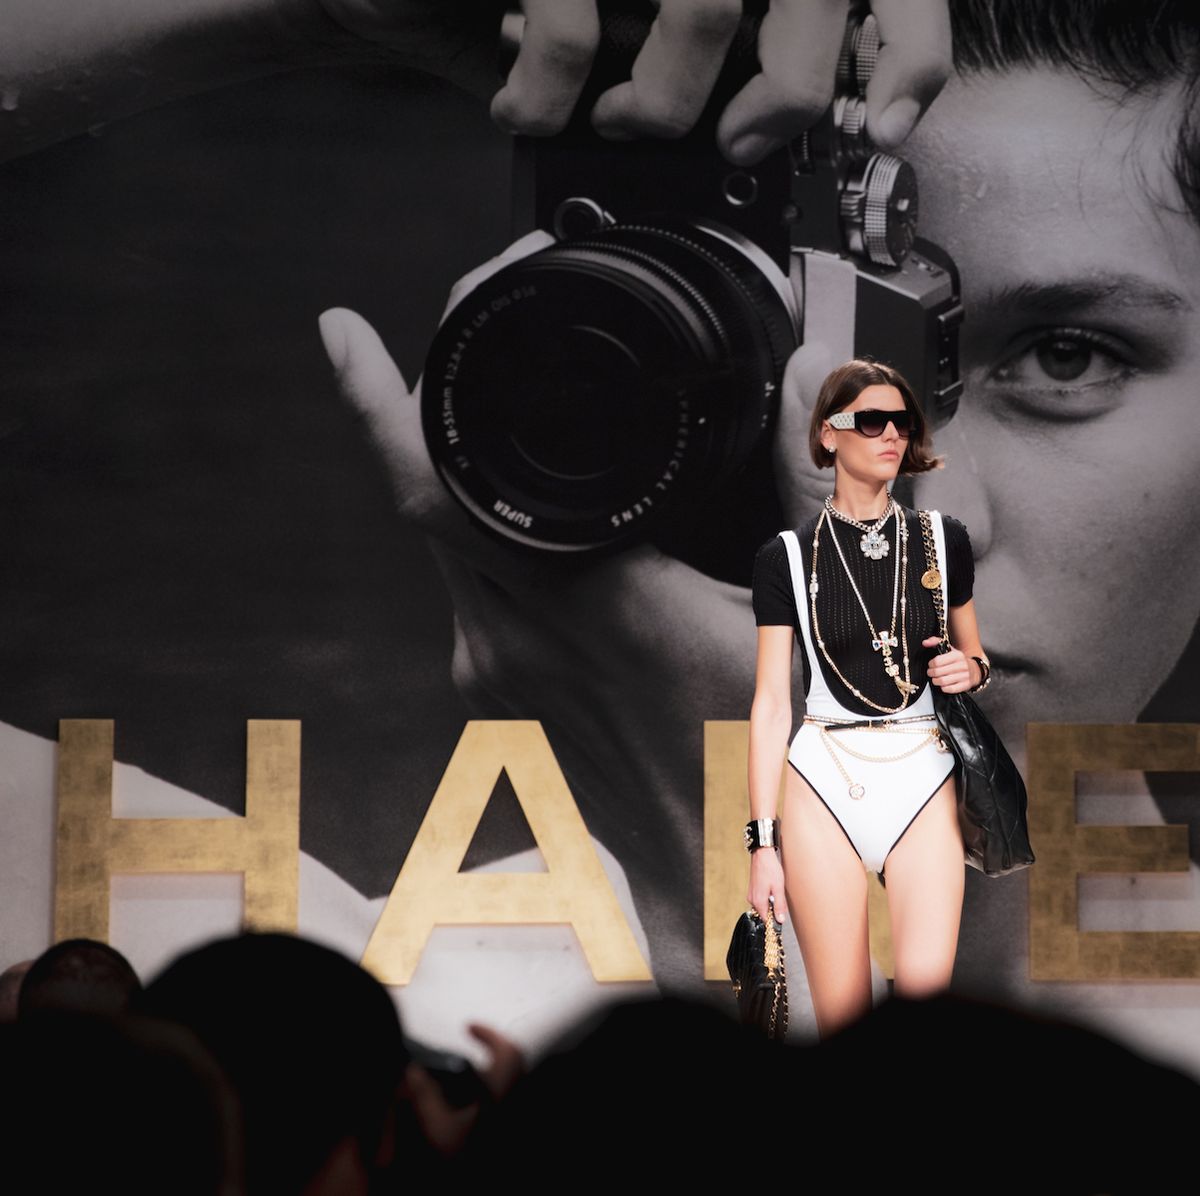 Chanel 2022 Eyewear Campaign